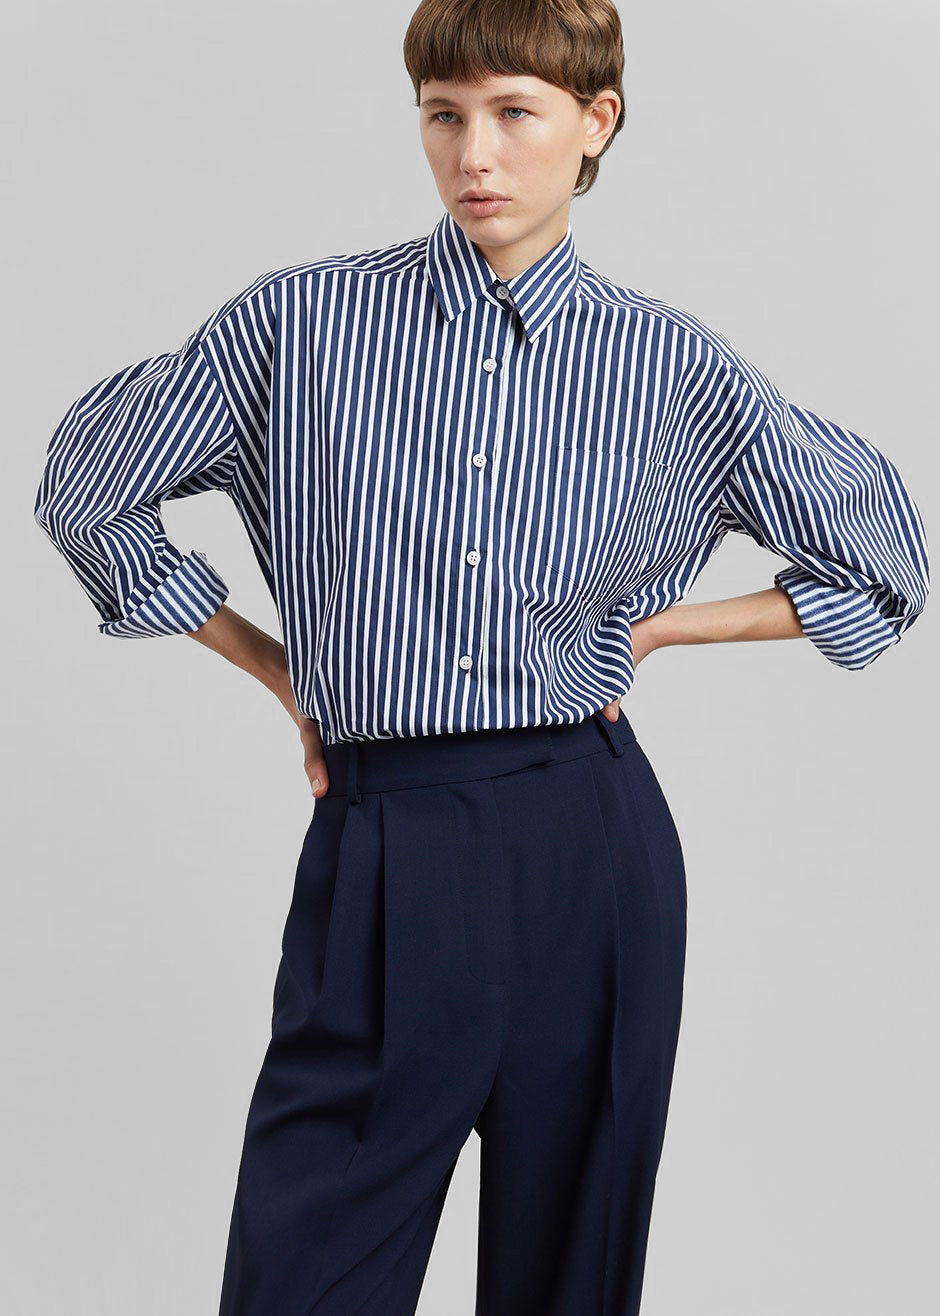 Melody Cotton Shirt - Navy Stripe - 4